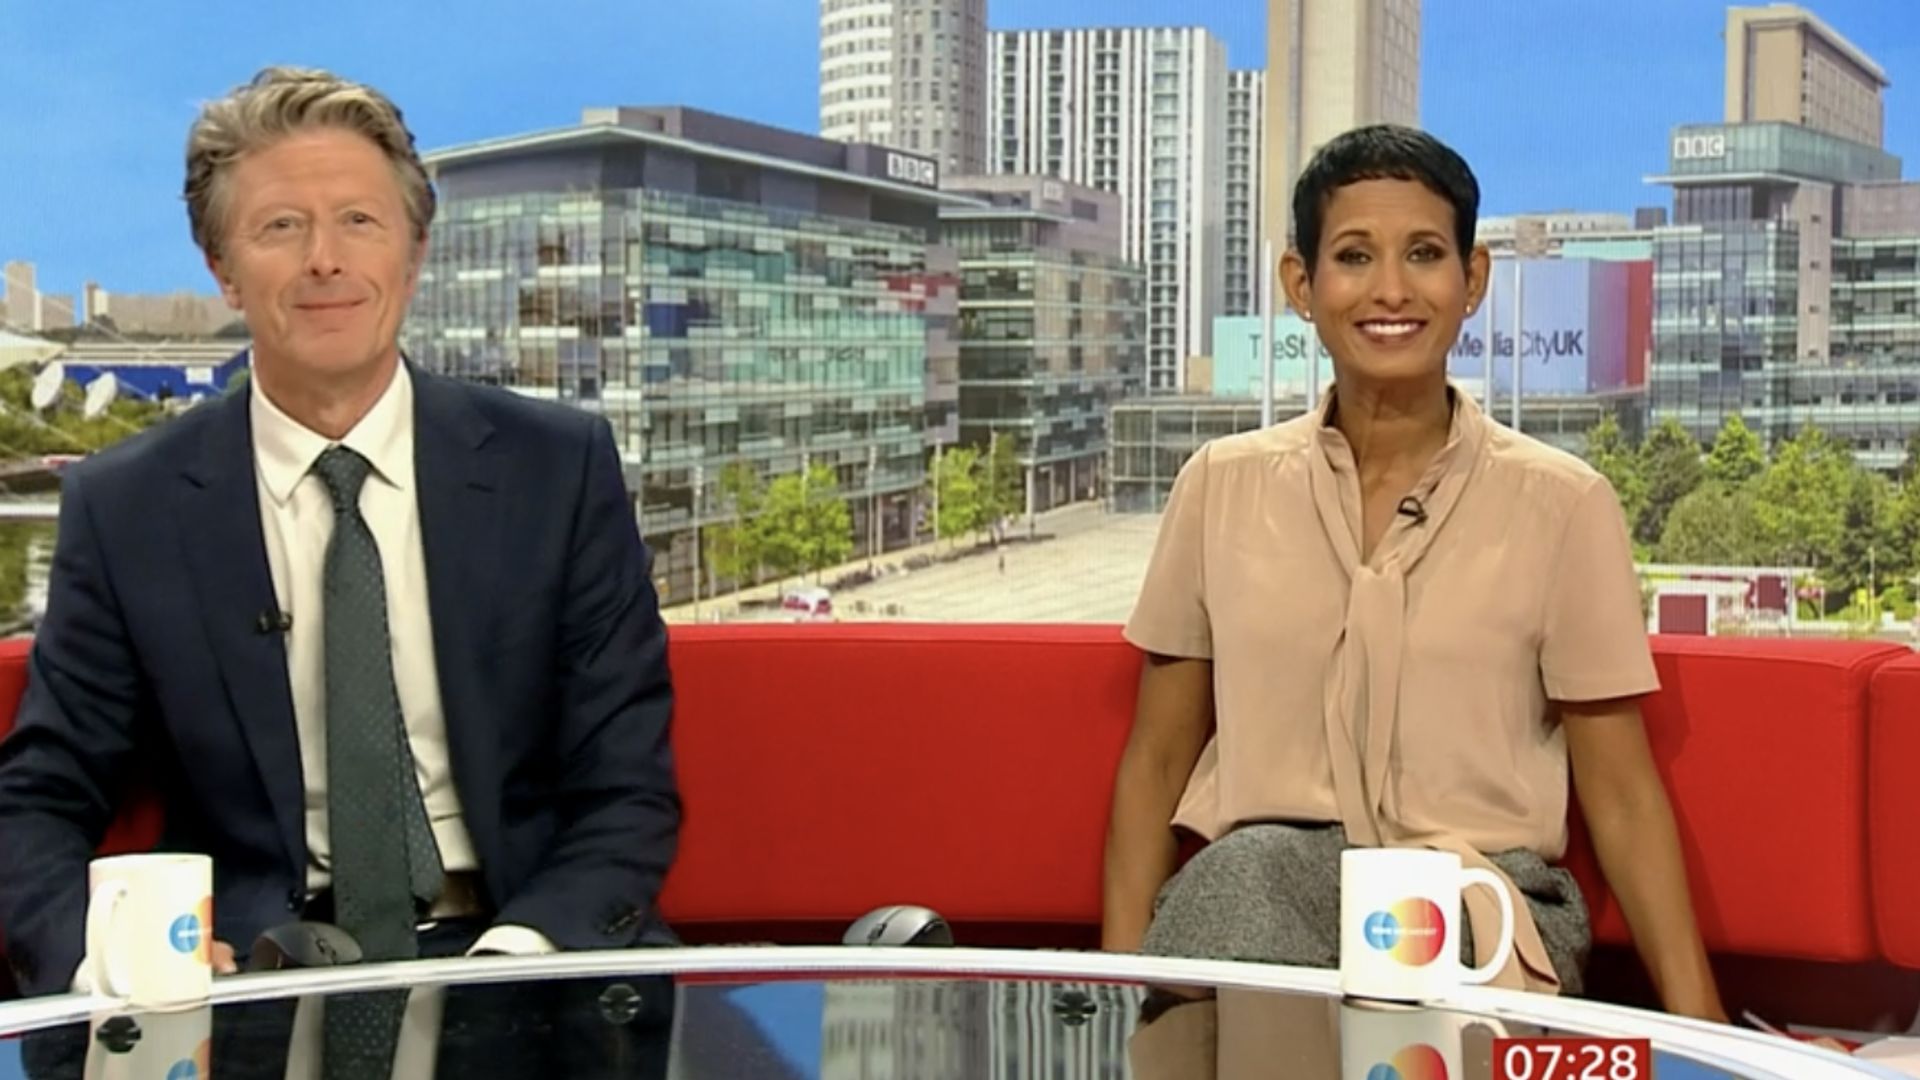 Naga Munchetty and Charlie Stayt smiling on red sofa bbc breakfast